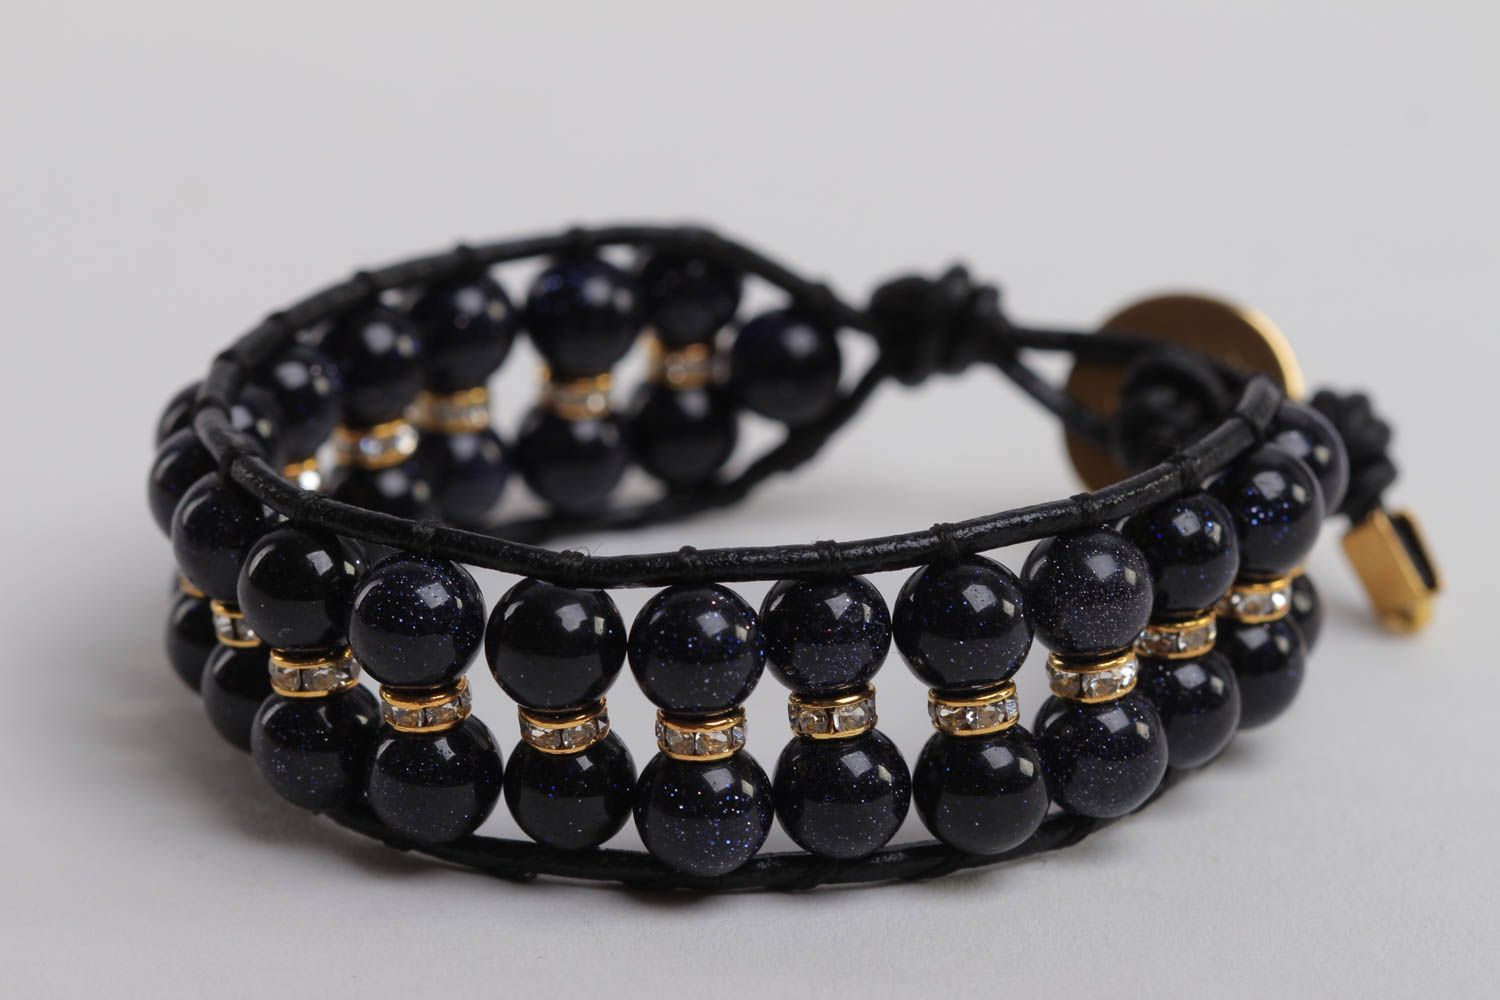 Beautiful handmade wrist bracelet designs gemstone bead bracelet gifts for her photo 3